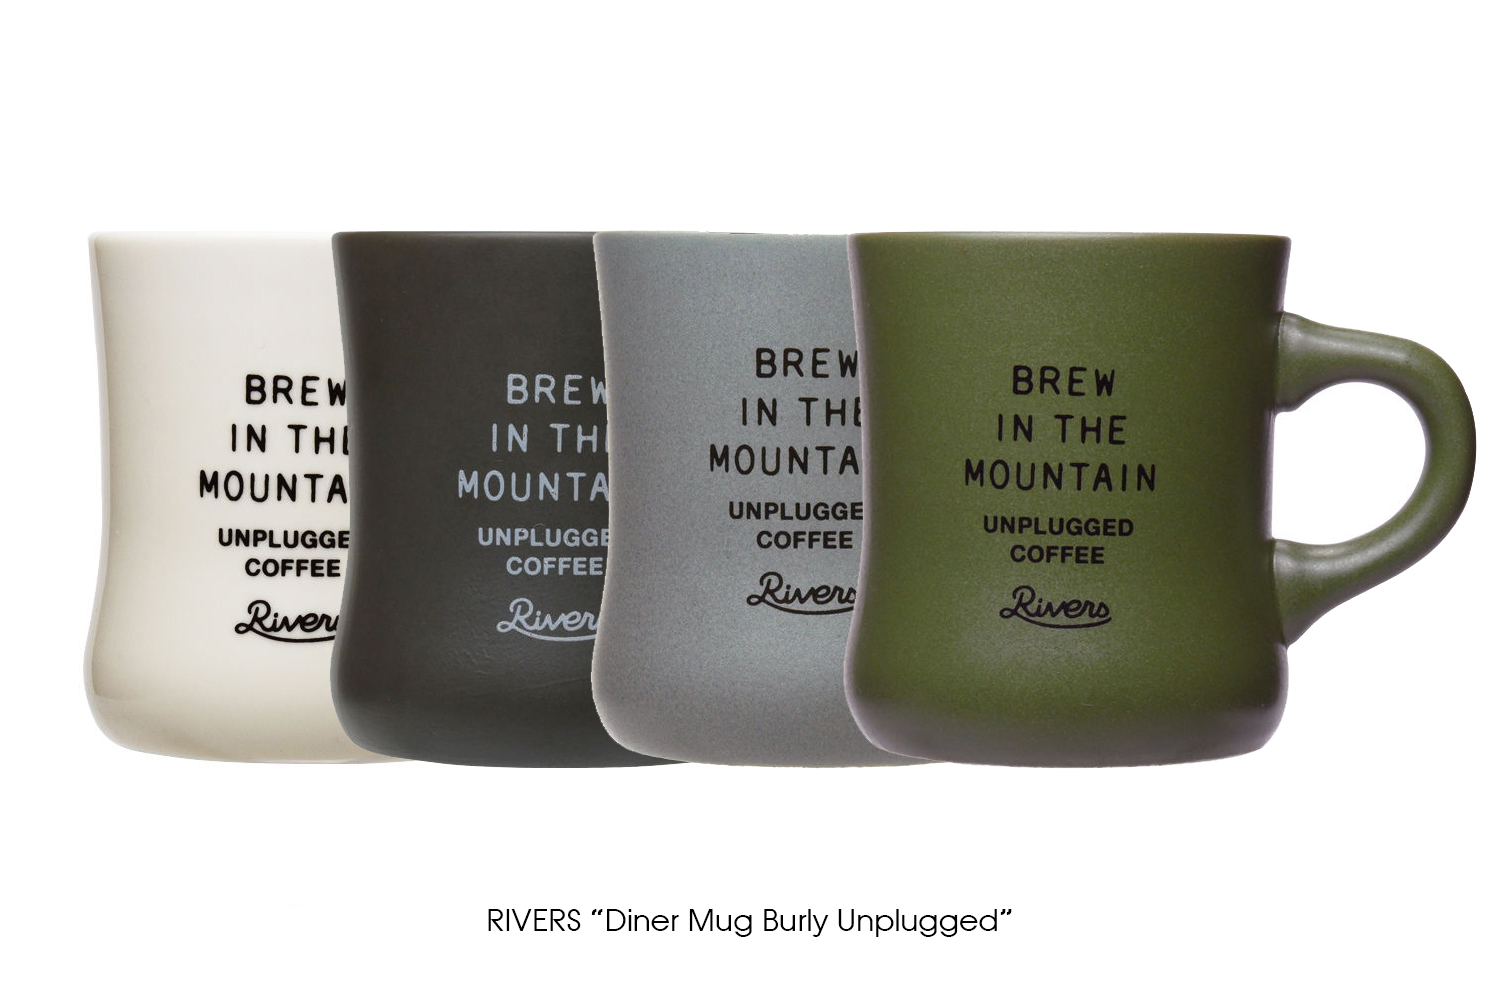 RIVERS "Diner Mug Burly Unplugged"